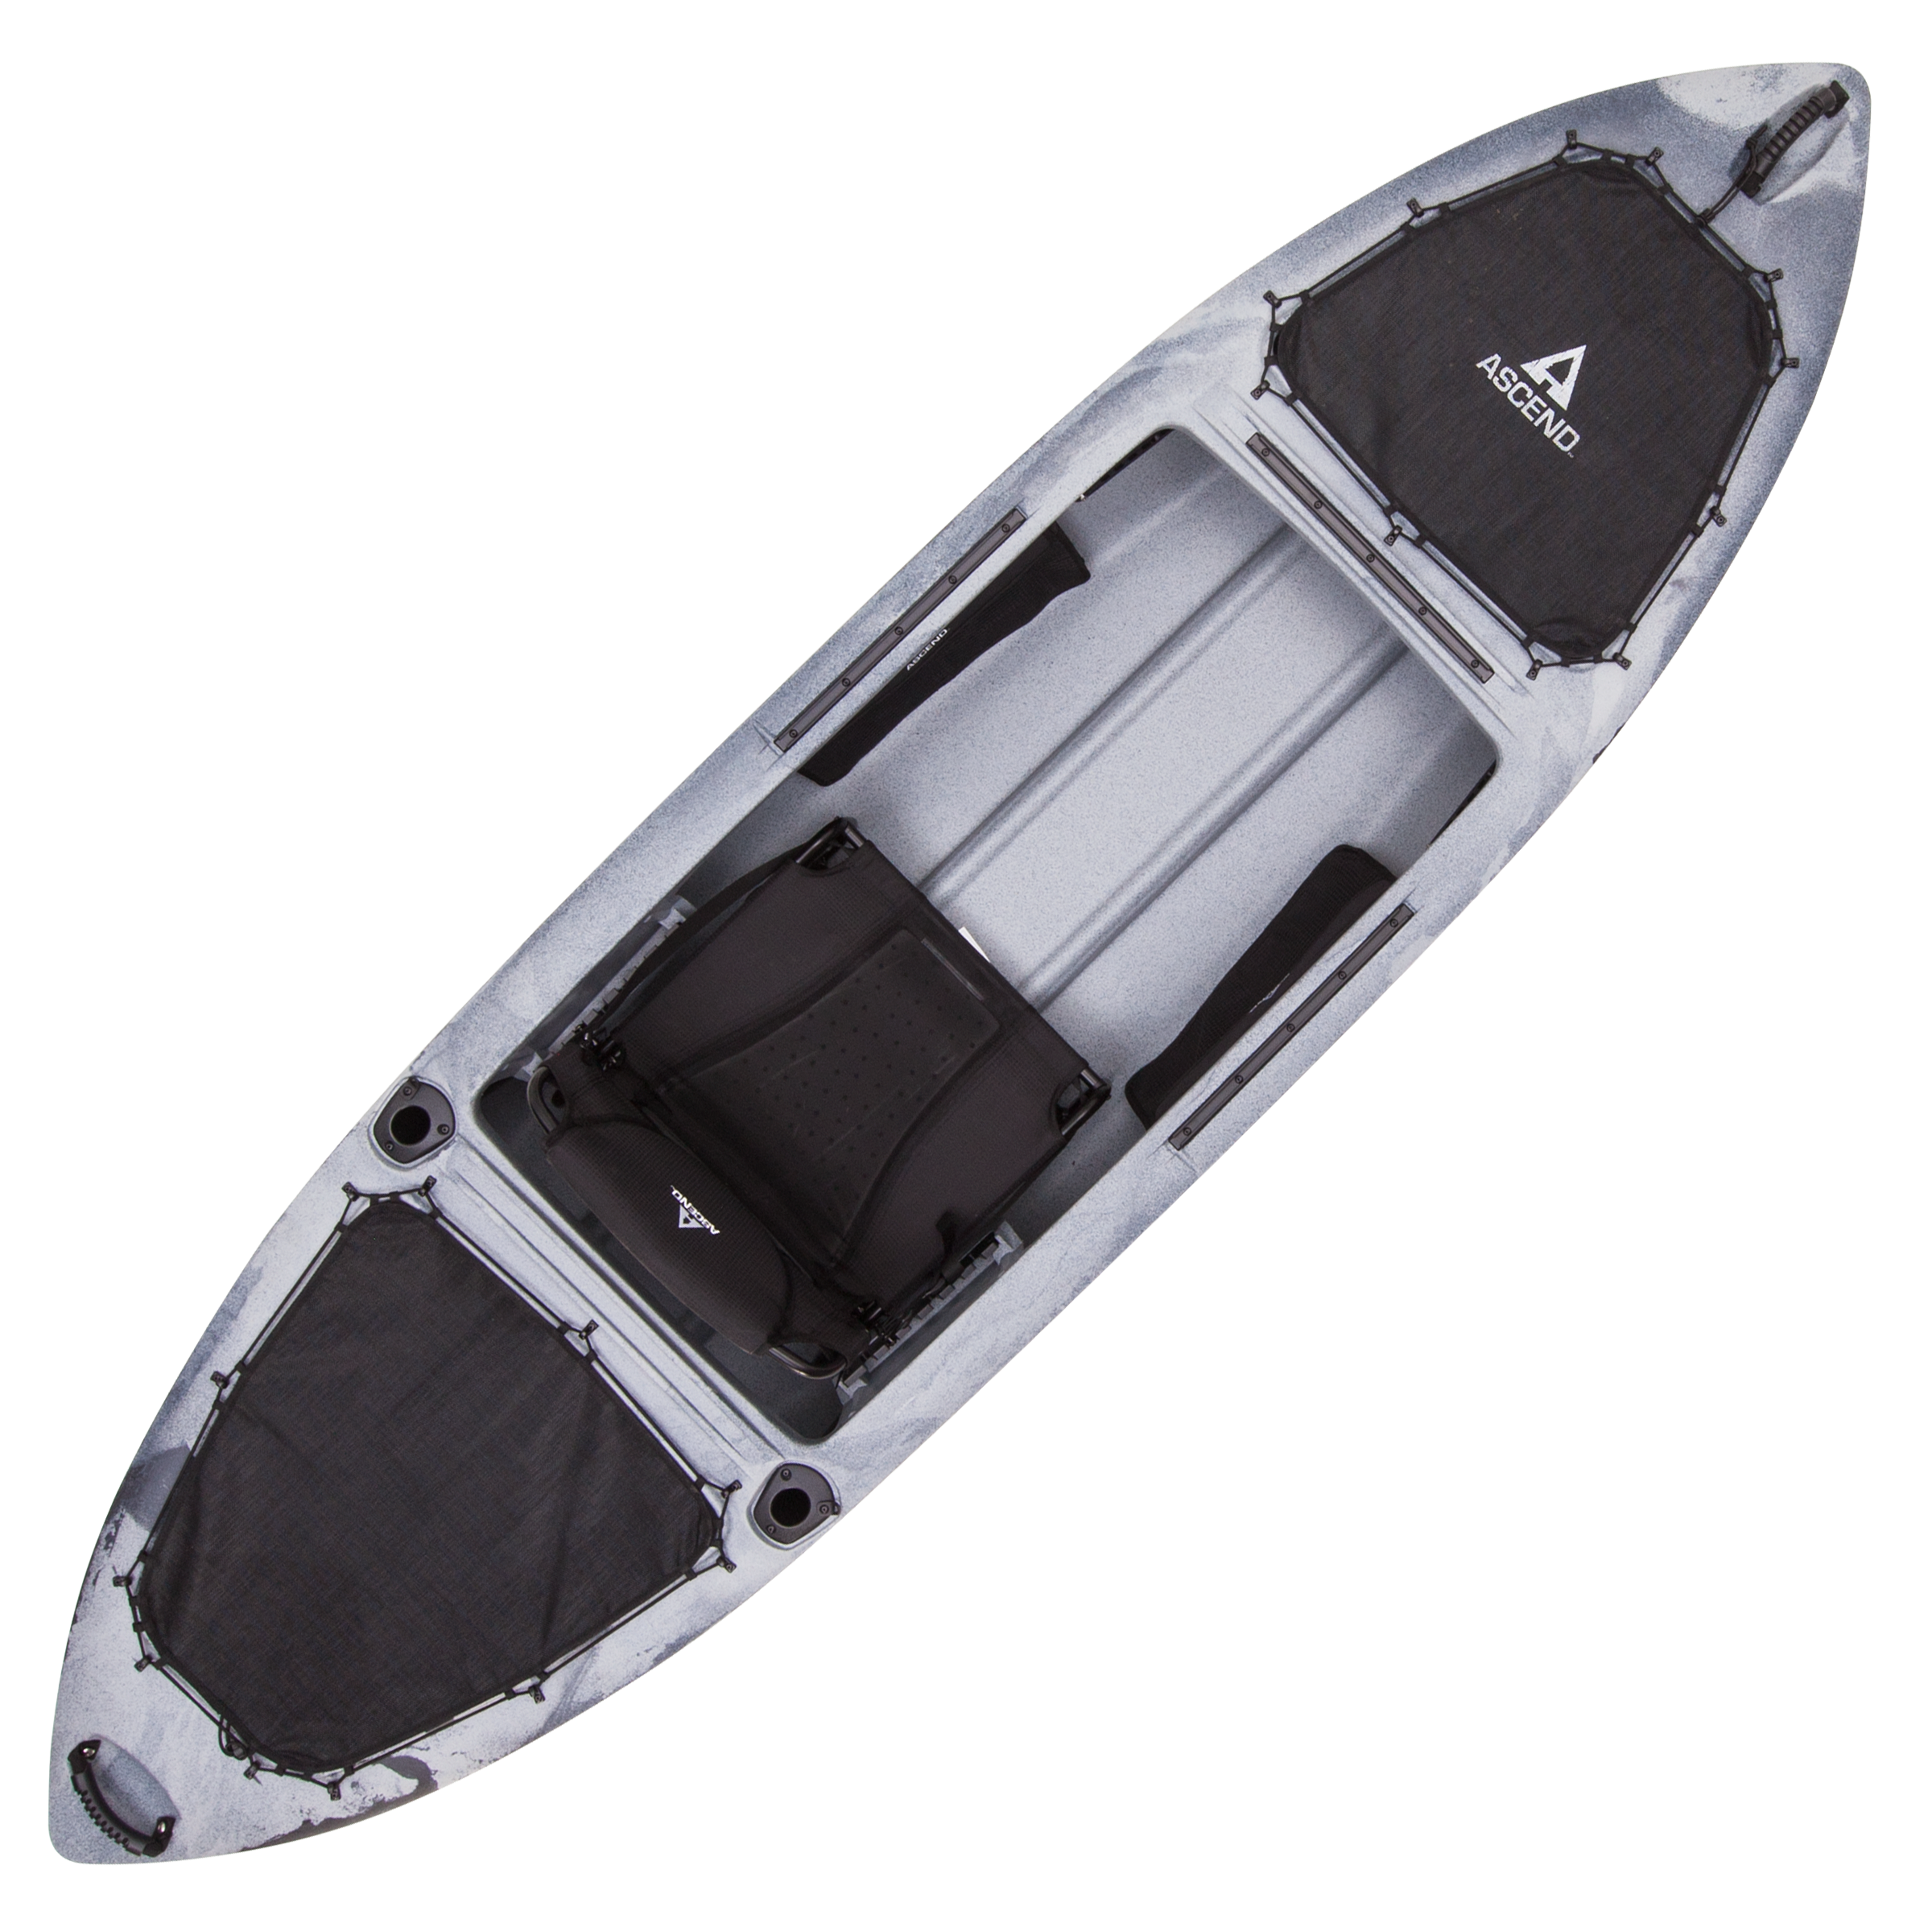 passenger rod storage - Bass Boats, Canoes, Kayaks and more - Bass